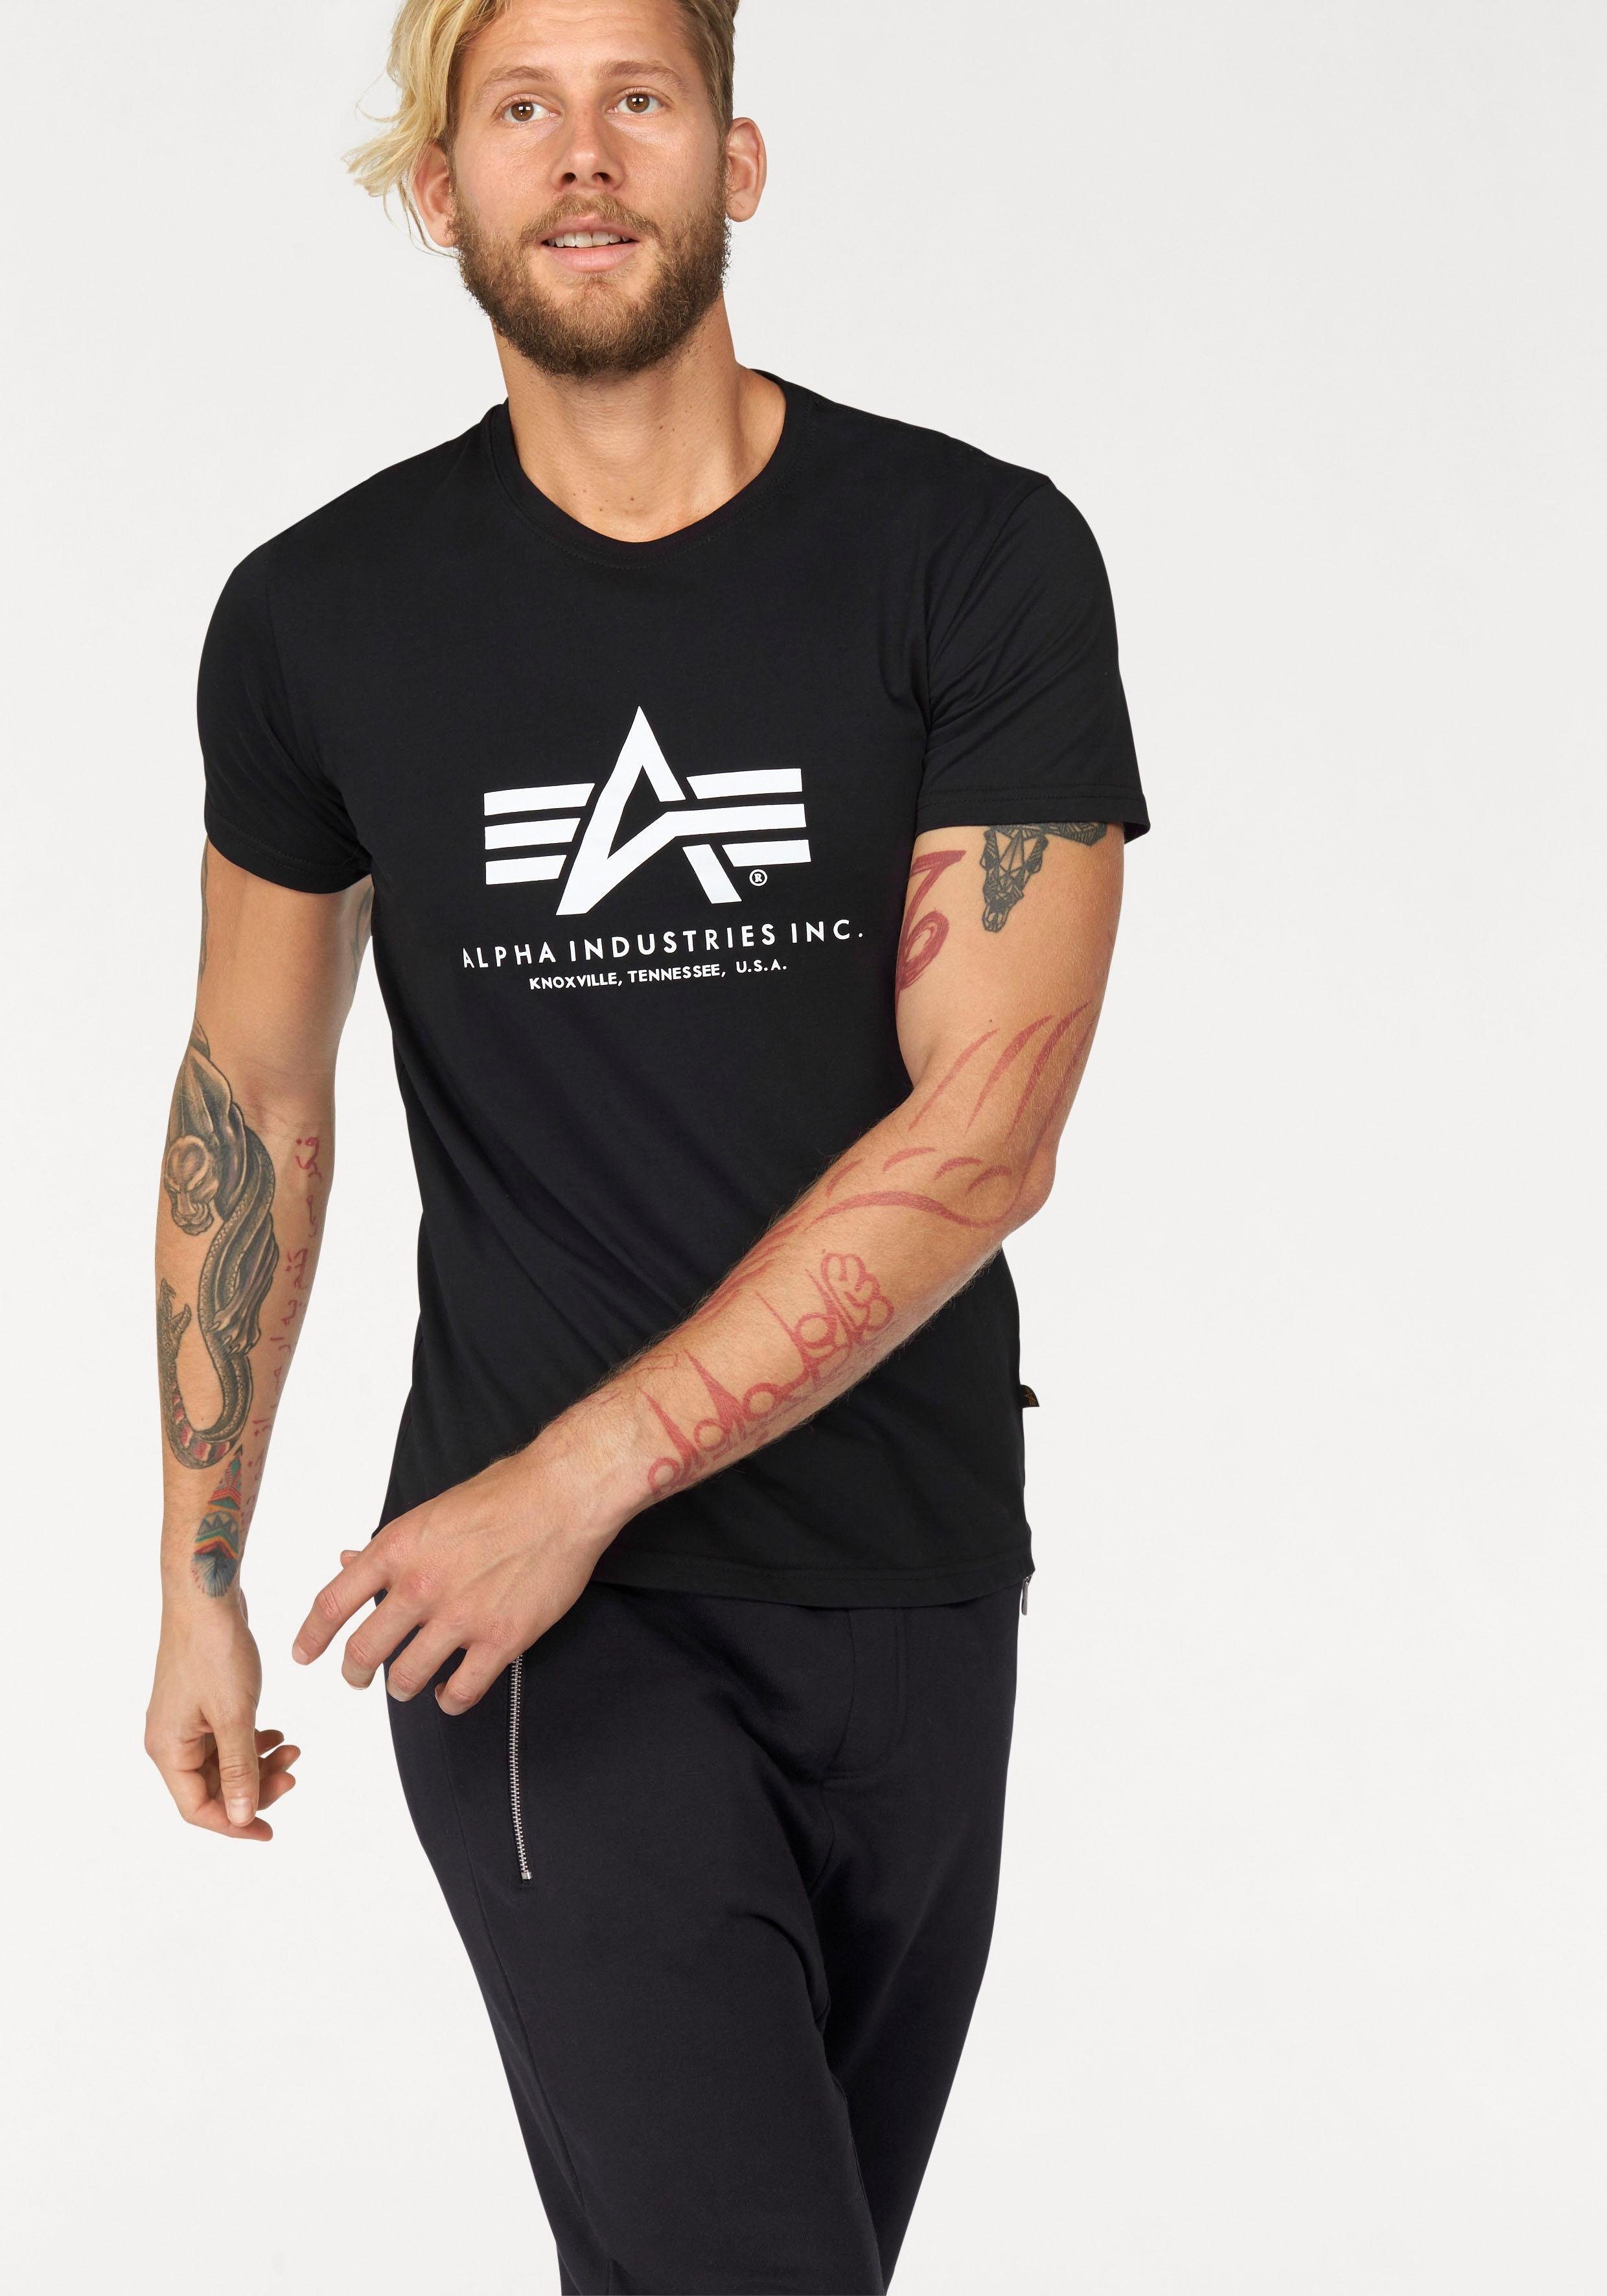 Industries Basic T-Shirt black-03 Alpha T-Shirt